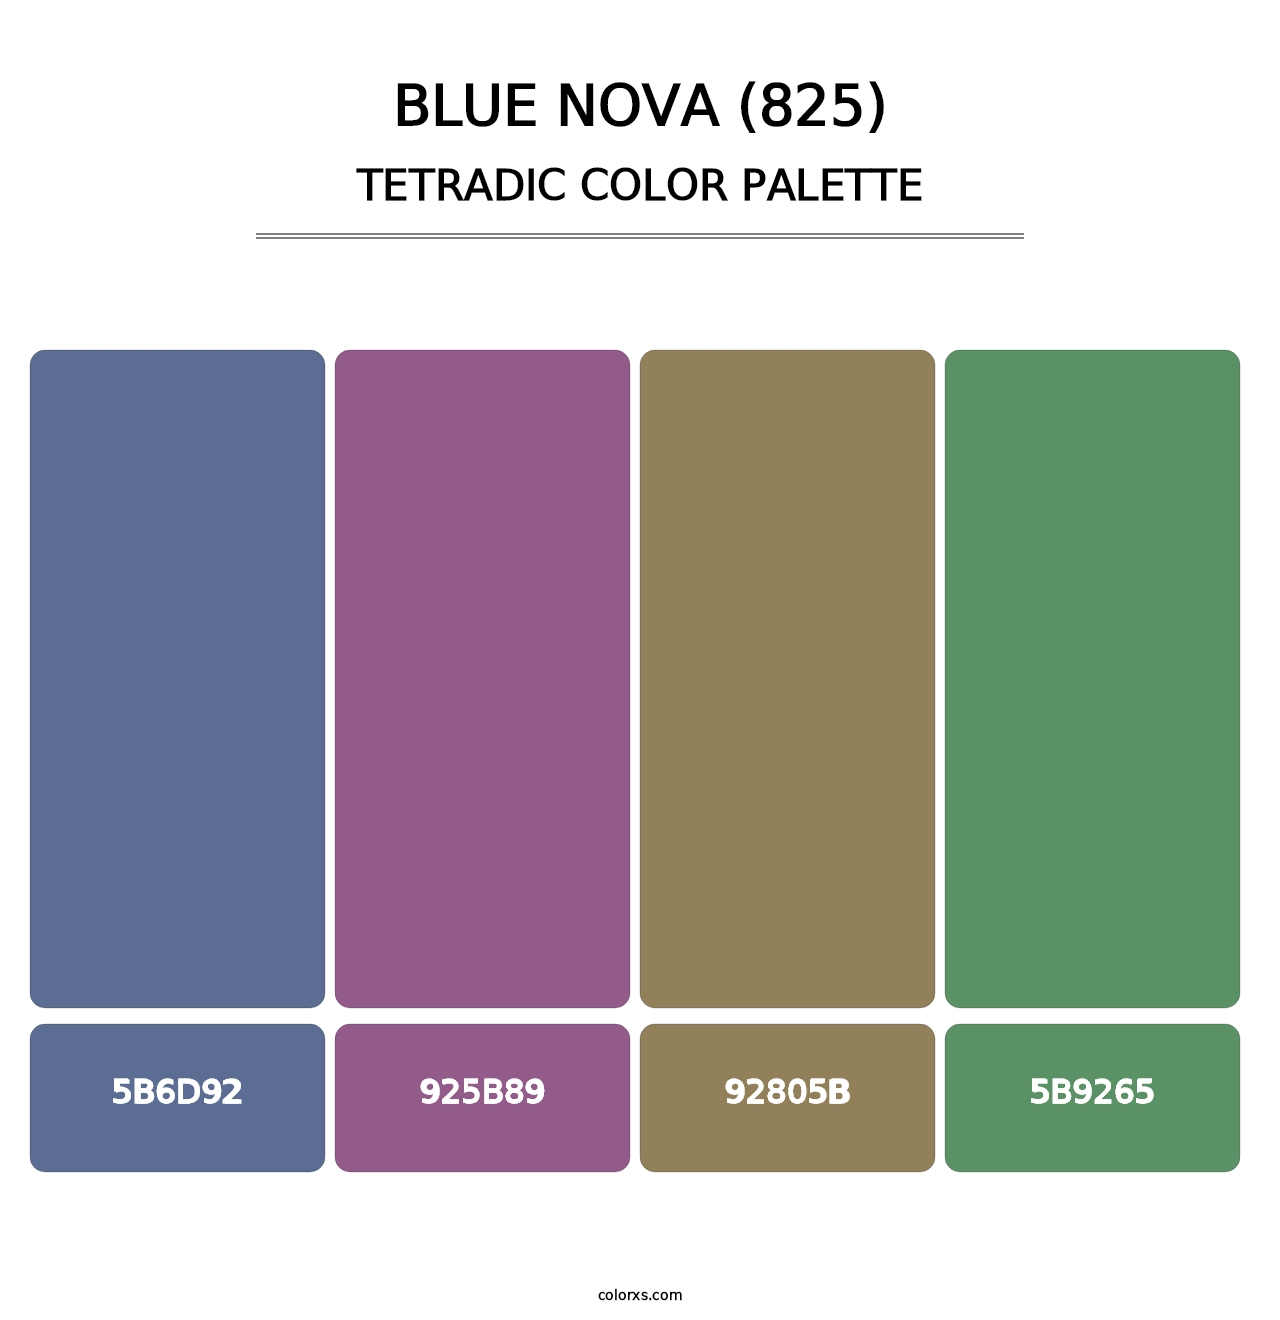 Blue Nova (825) - Tetradic Color Palette